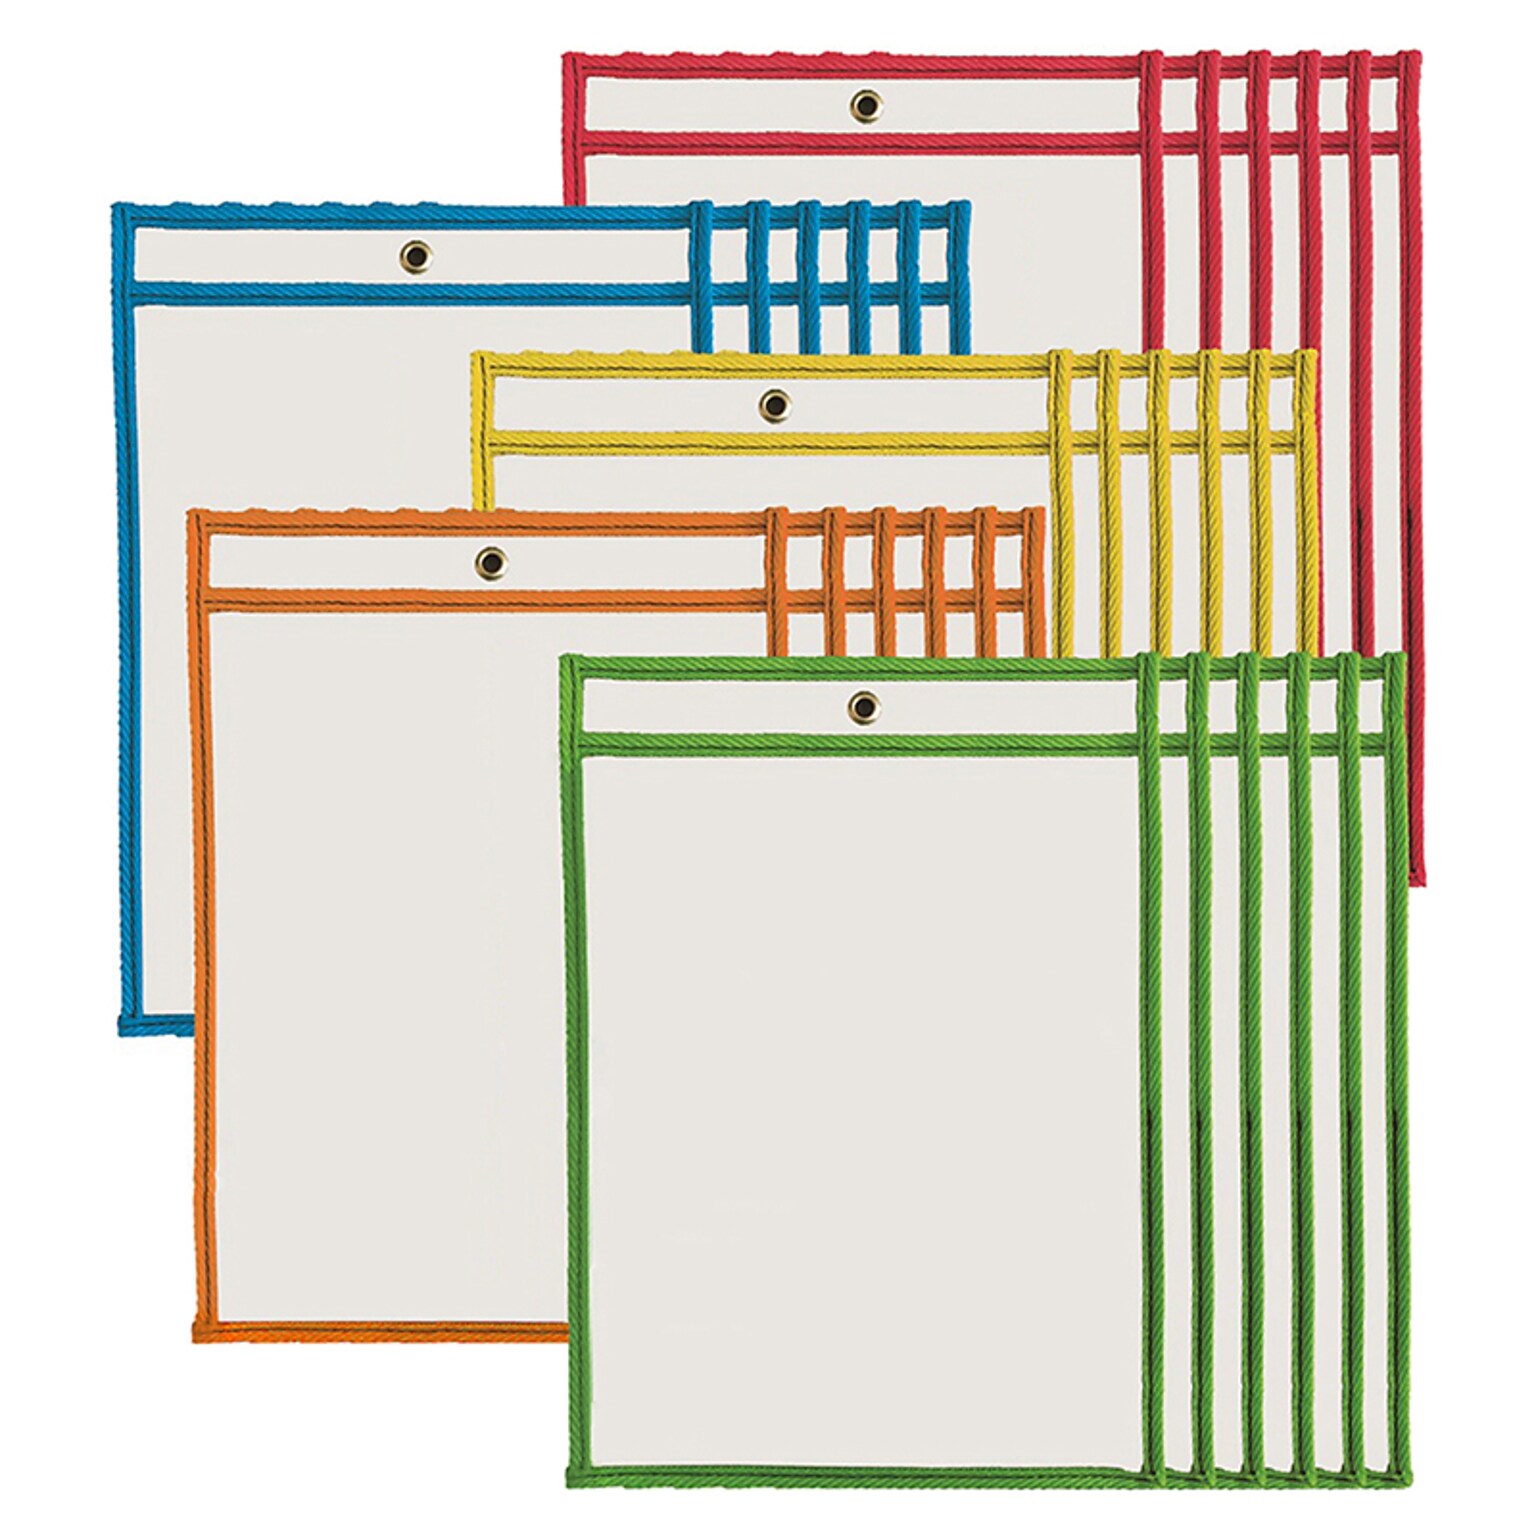 Charles Leonard Dry Erase Pockets, 9 x 12, Assorted Colors, Set of 30 (CHL29030)